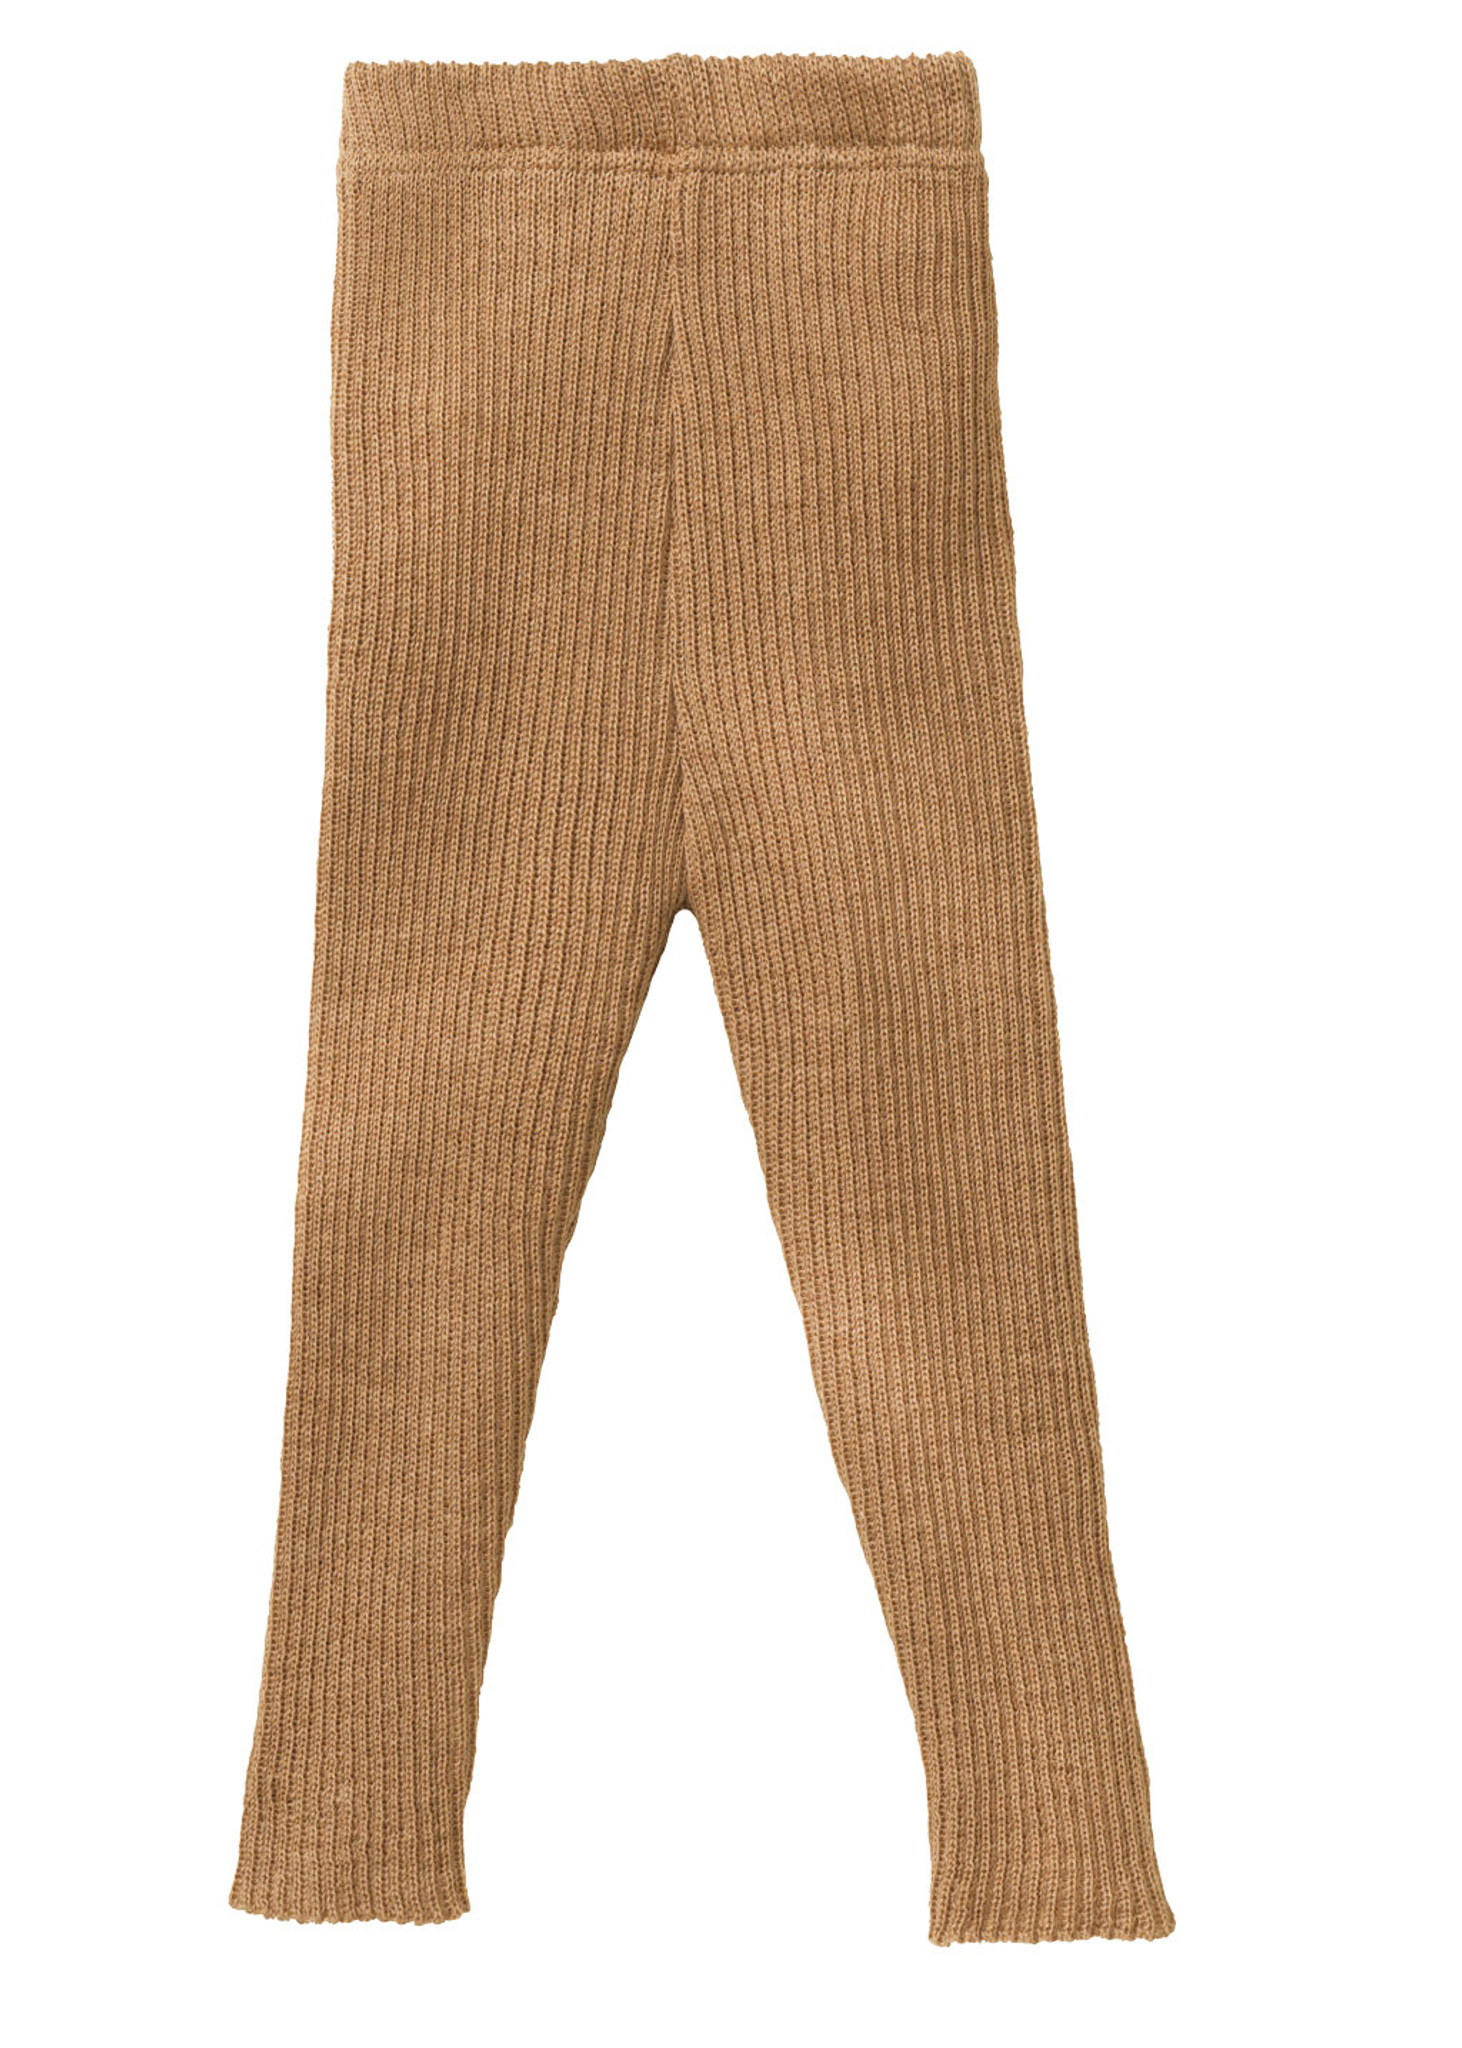 REIFF - Kids and Baby Winter Leggings Pants, 100% Organic Merino Wool